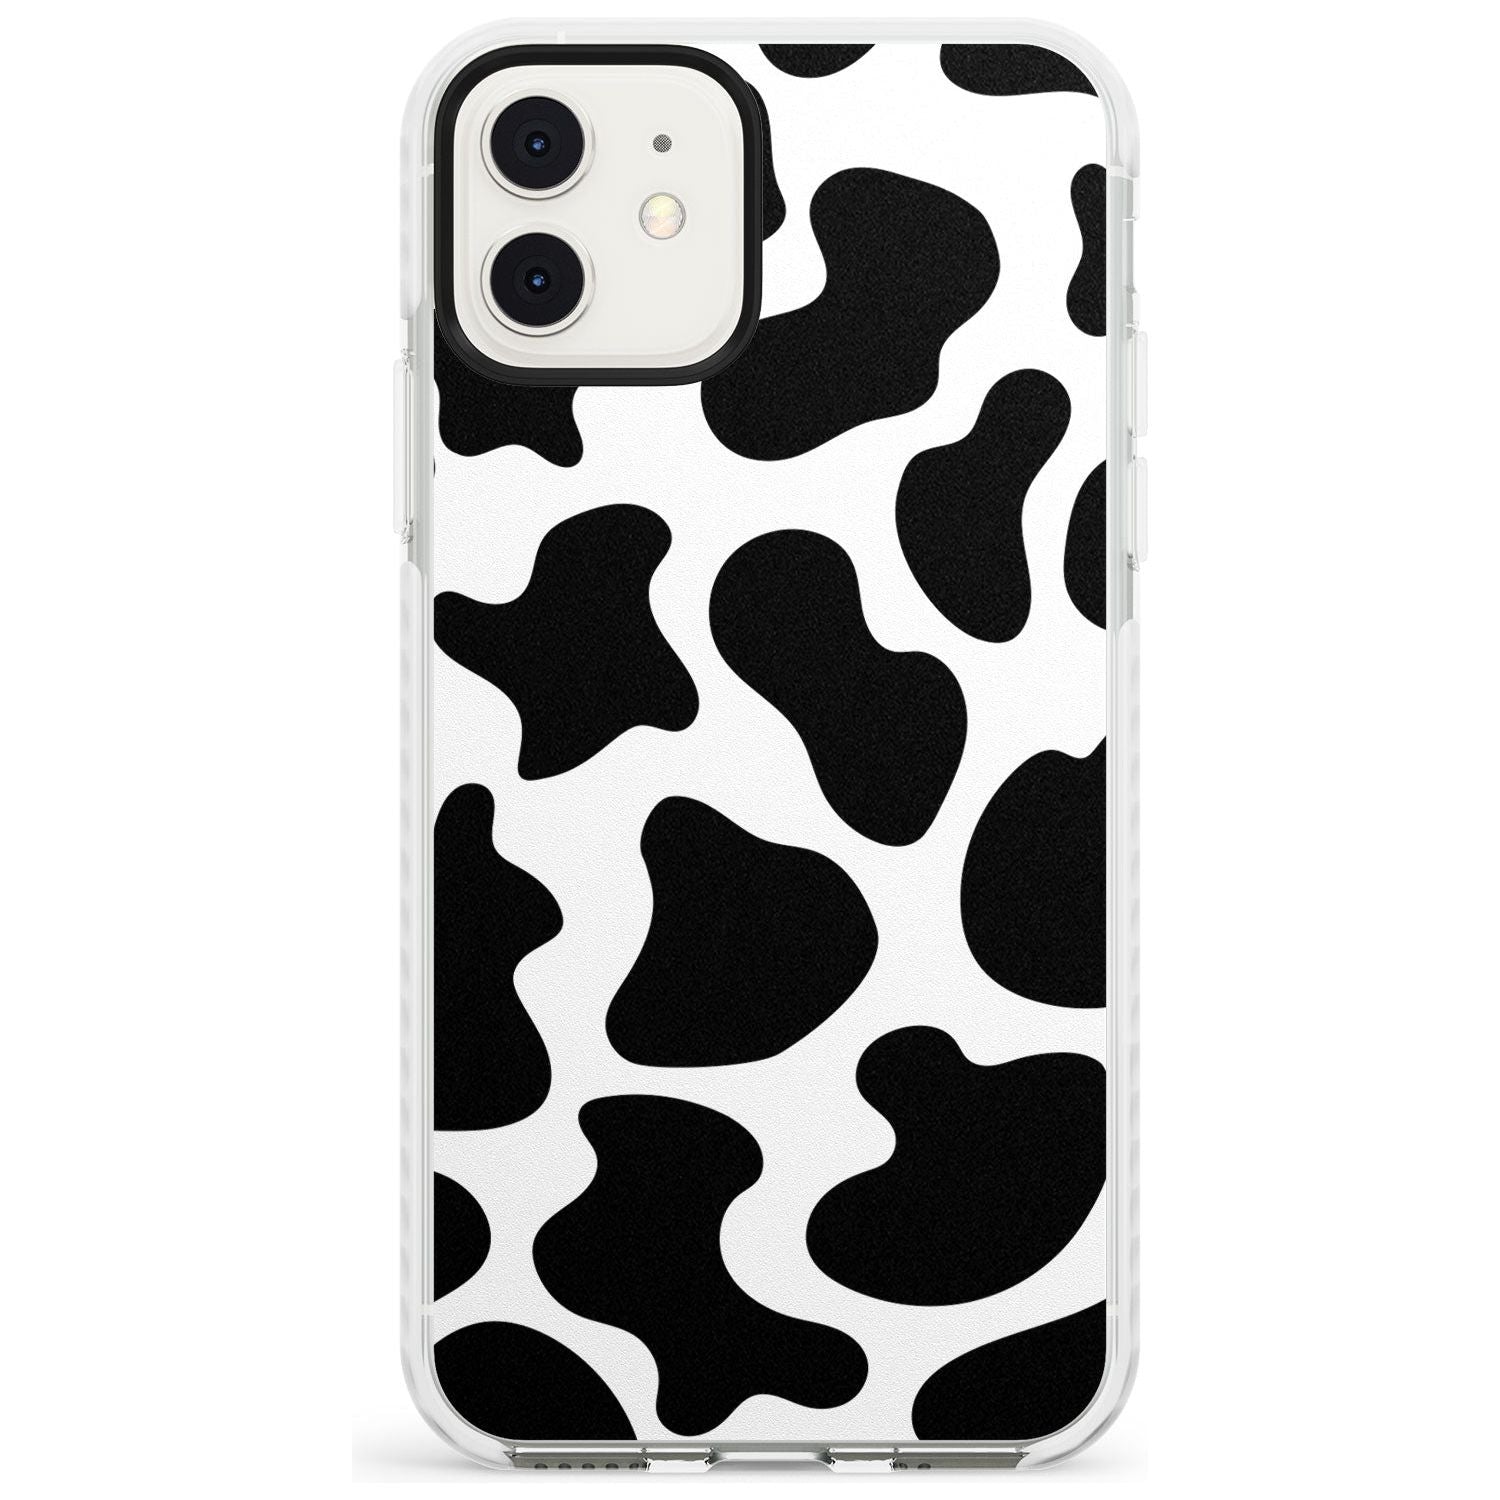 Cow Print Slim TPU Phone Case for iPhone 11